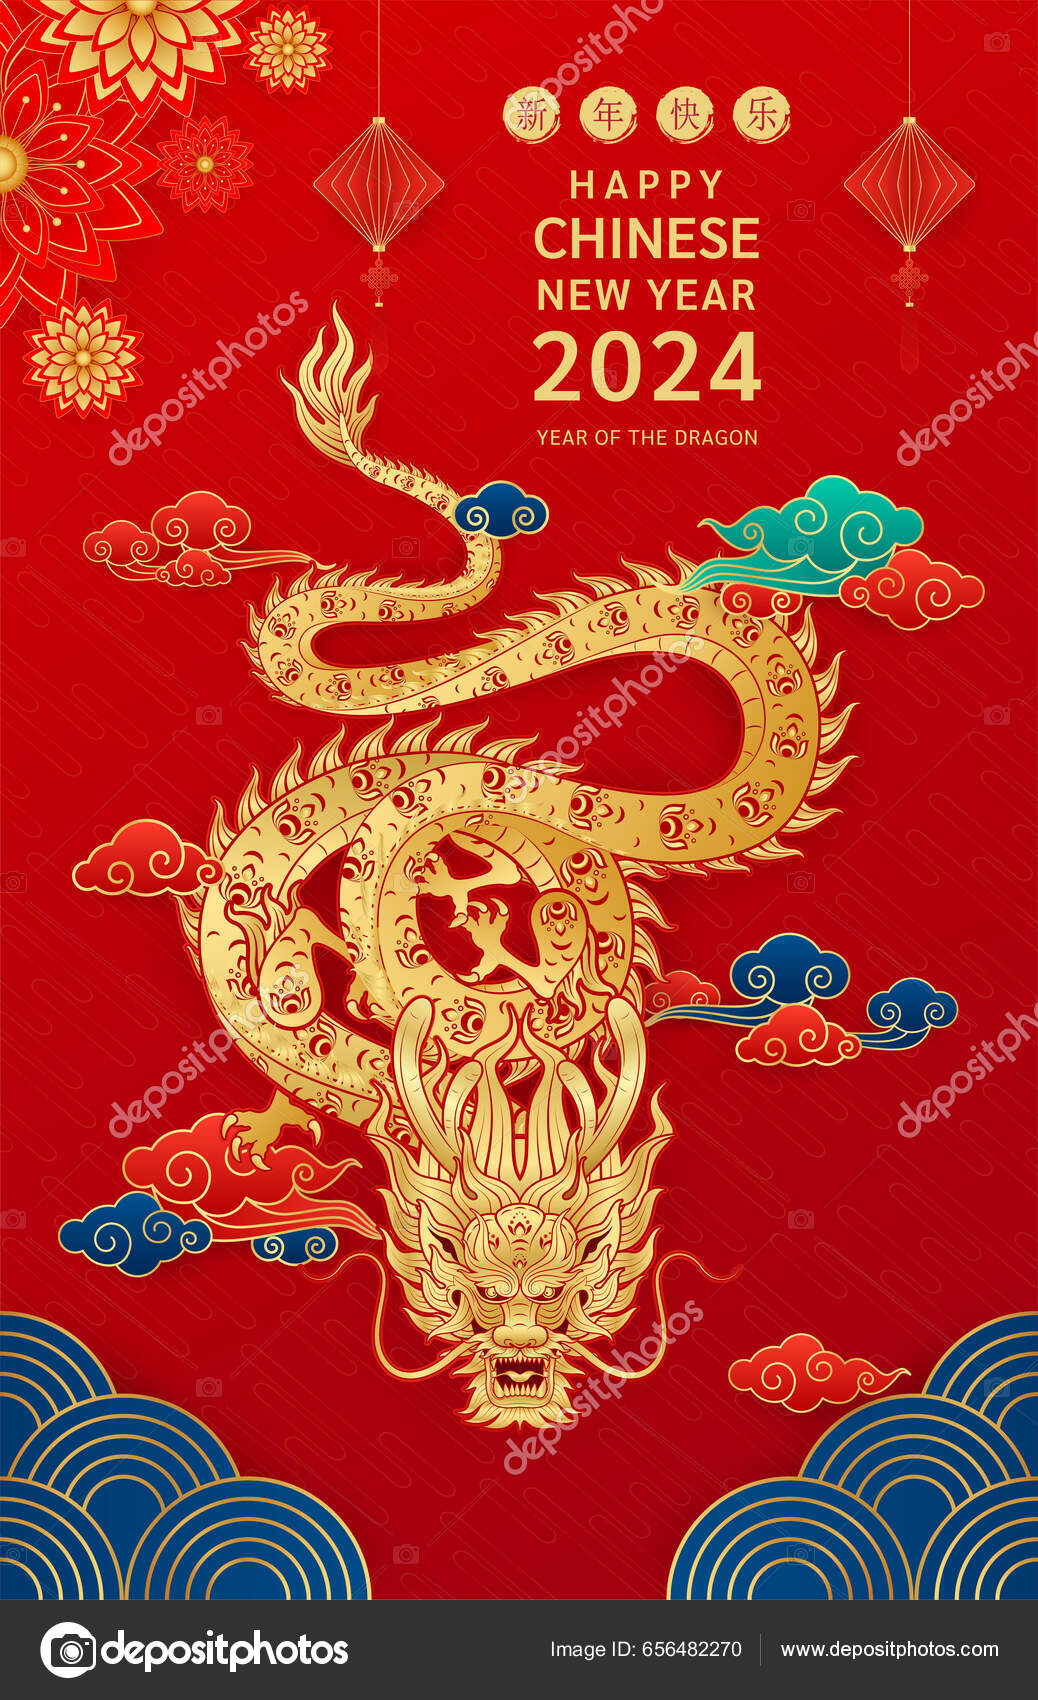 Depositphotos 656482270 Stock Illustration Happy Chinese New Year 2024 